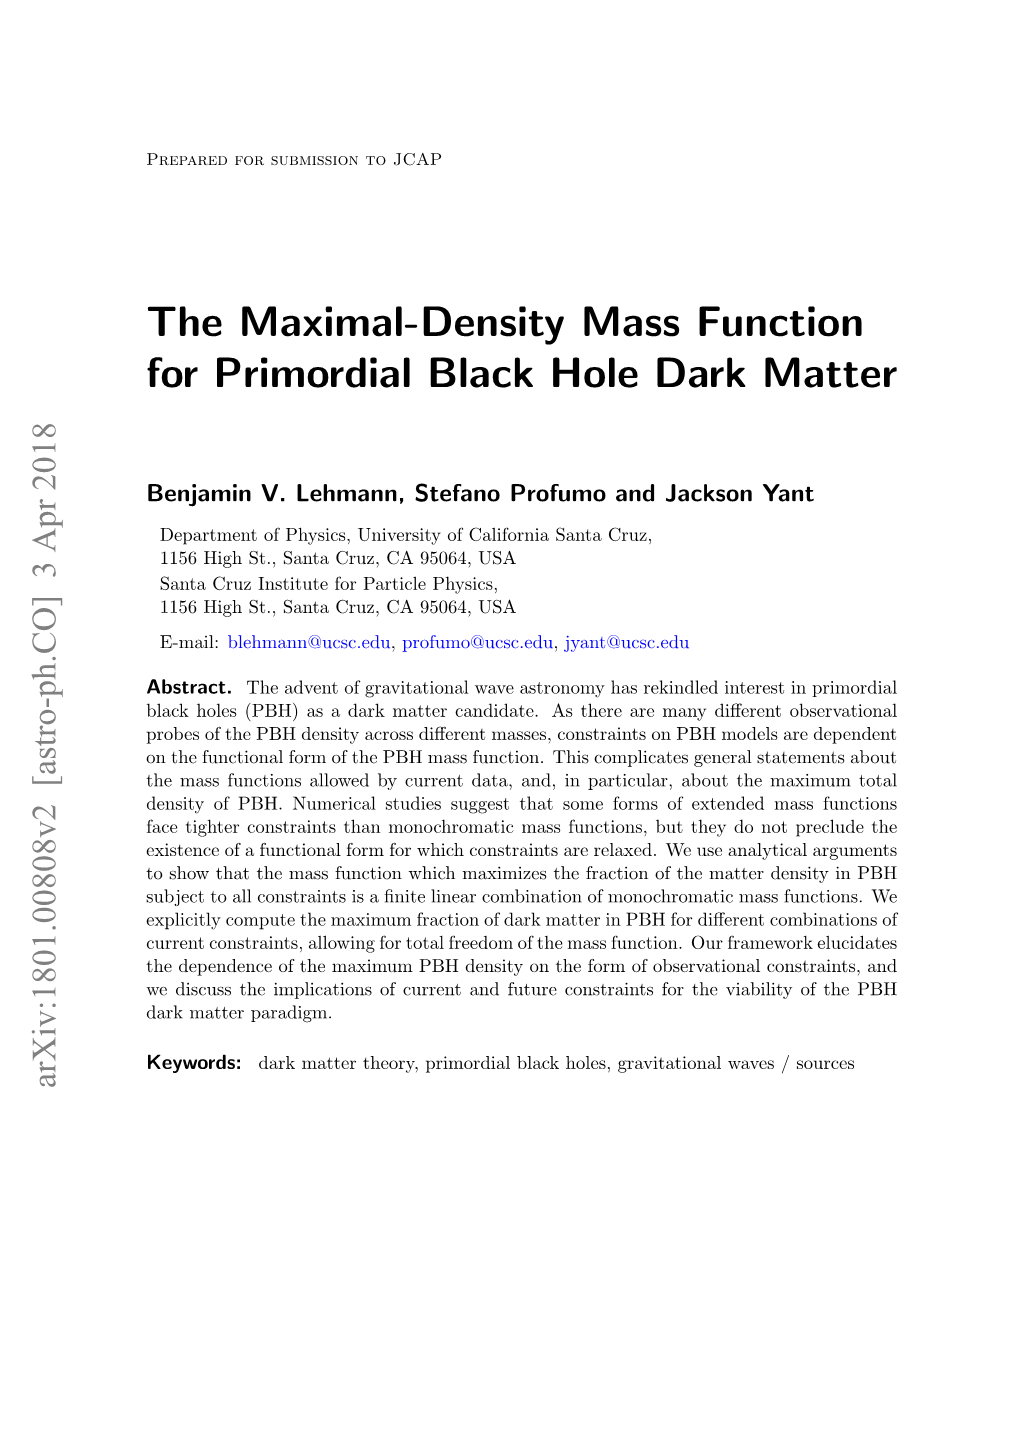 The Maximal-Density Mass Function for Primordial Black Hole Dark Matter